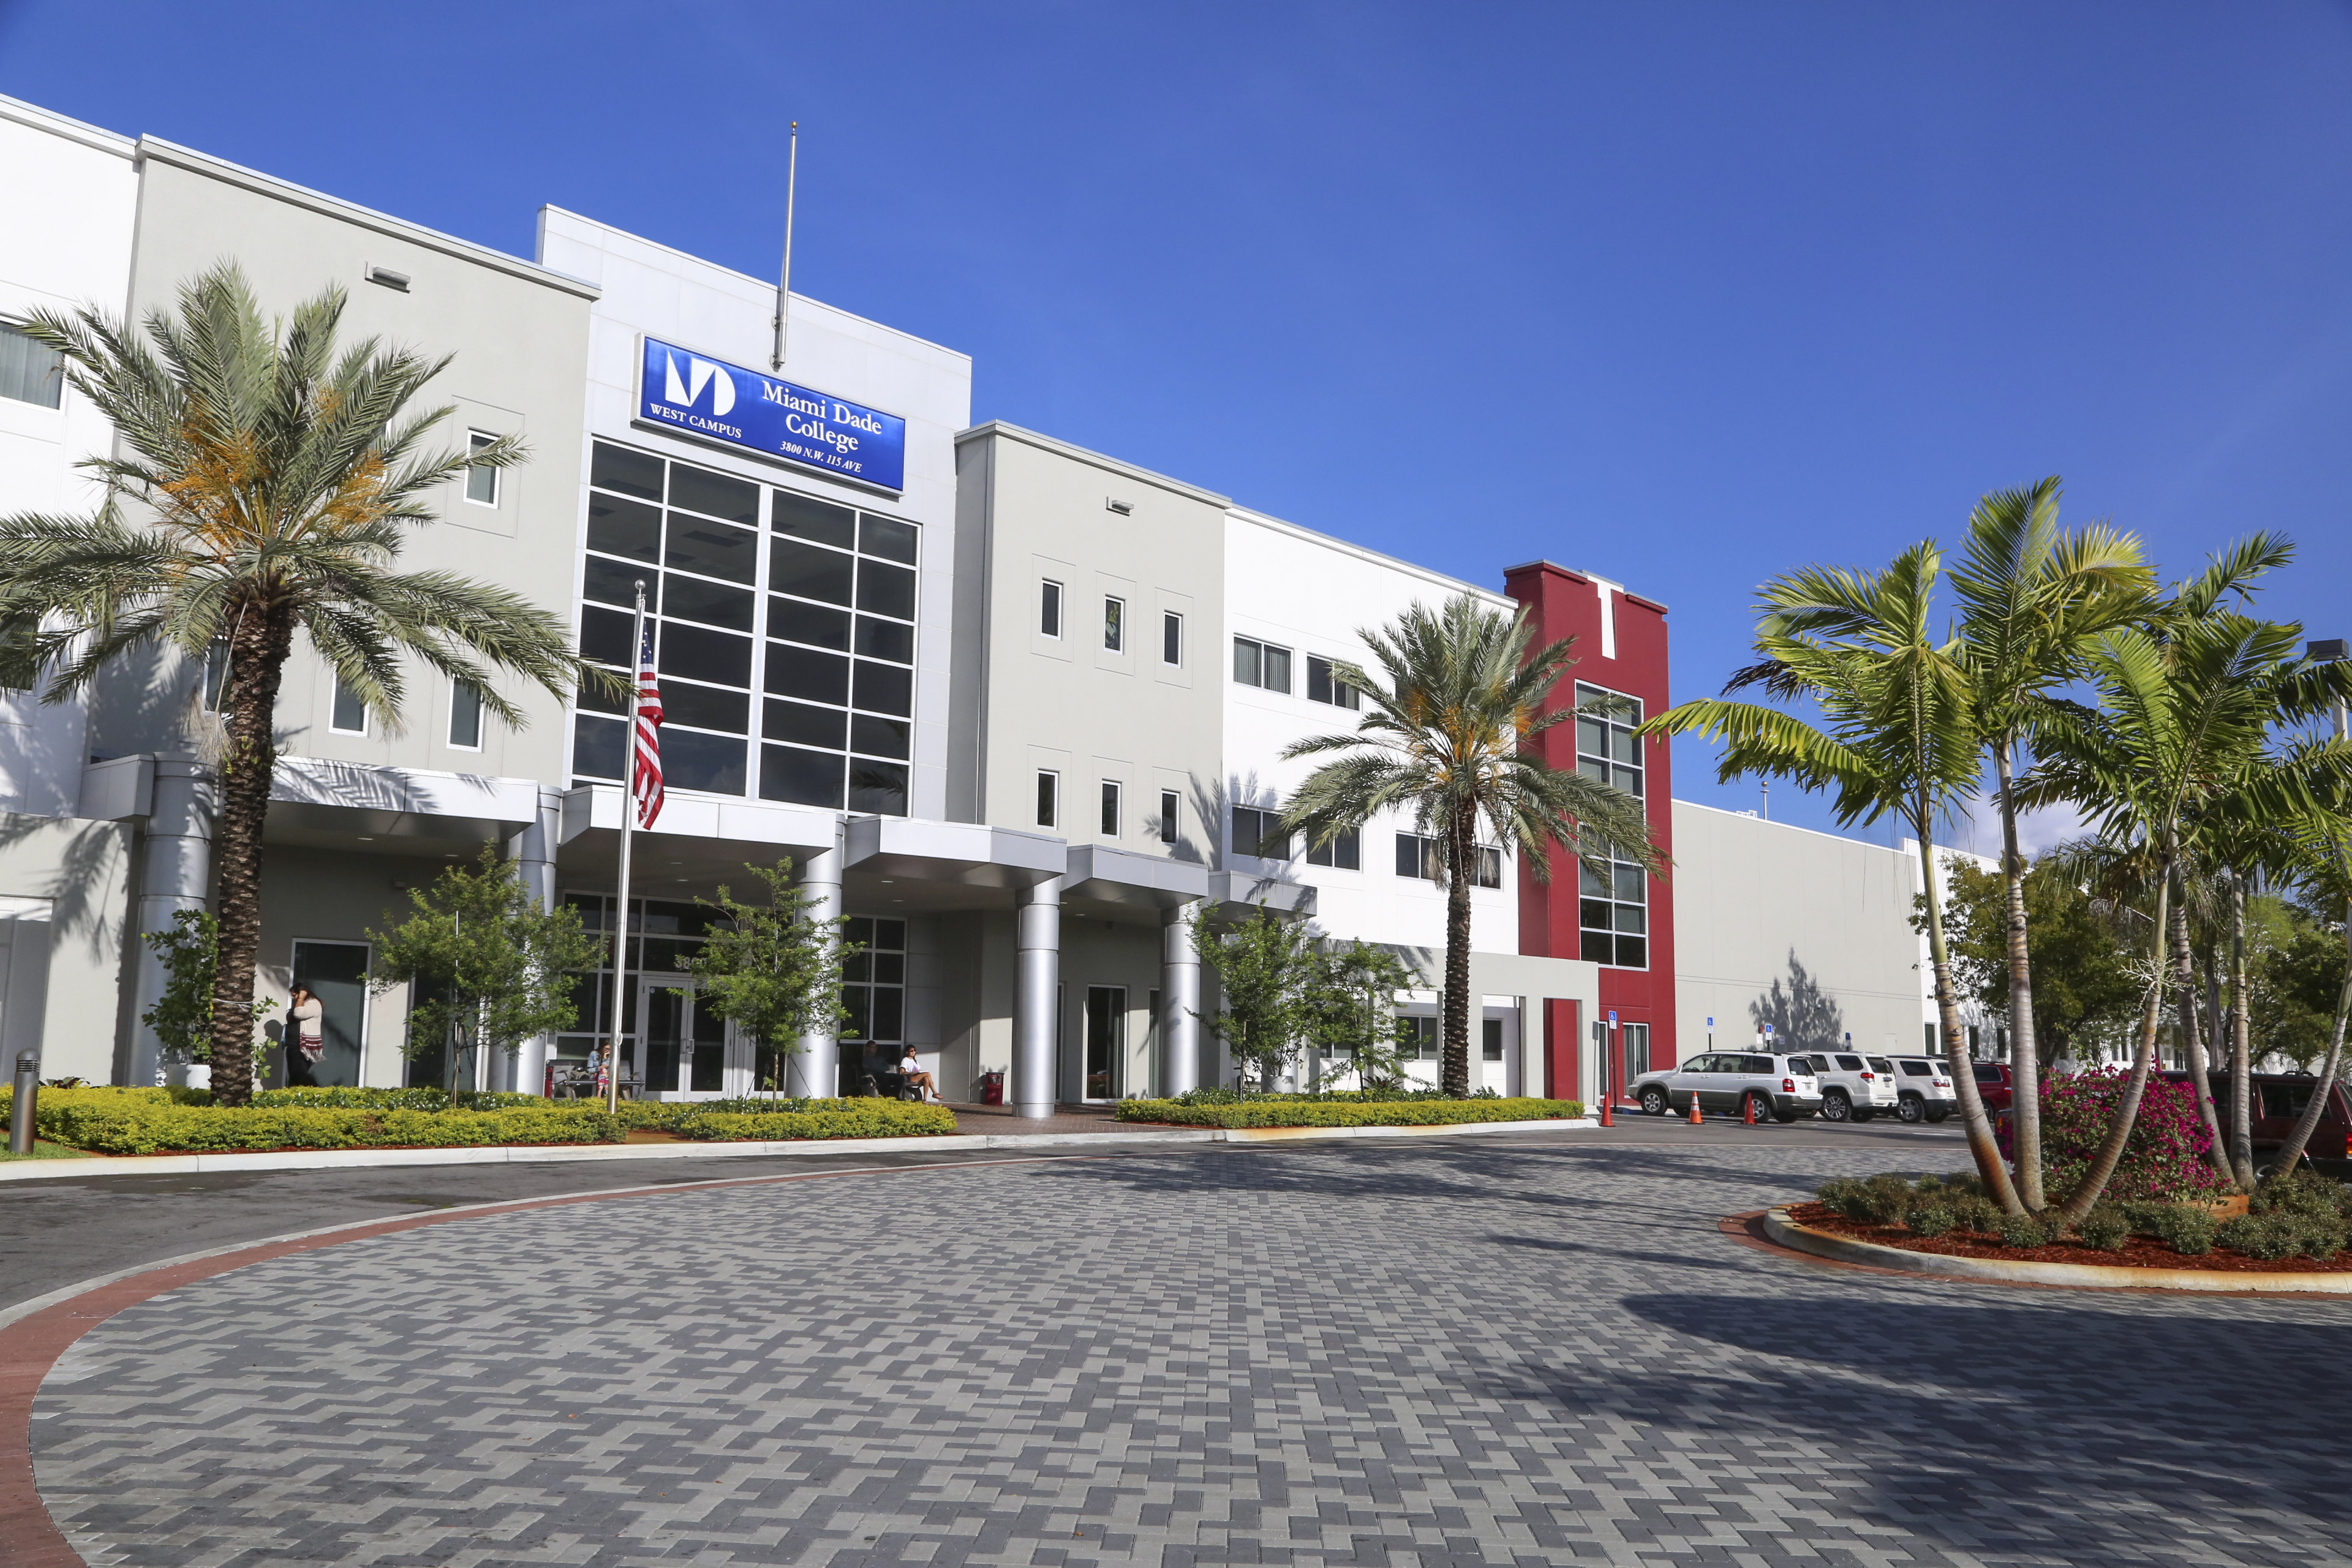 Programas académicos más innovadores del Miami Dade College serán centro de atención en eMerge Americas 2019